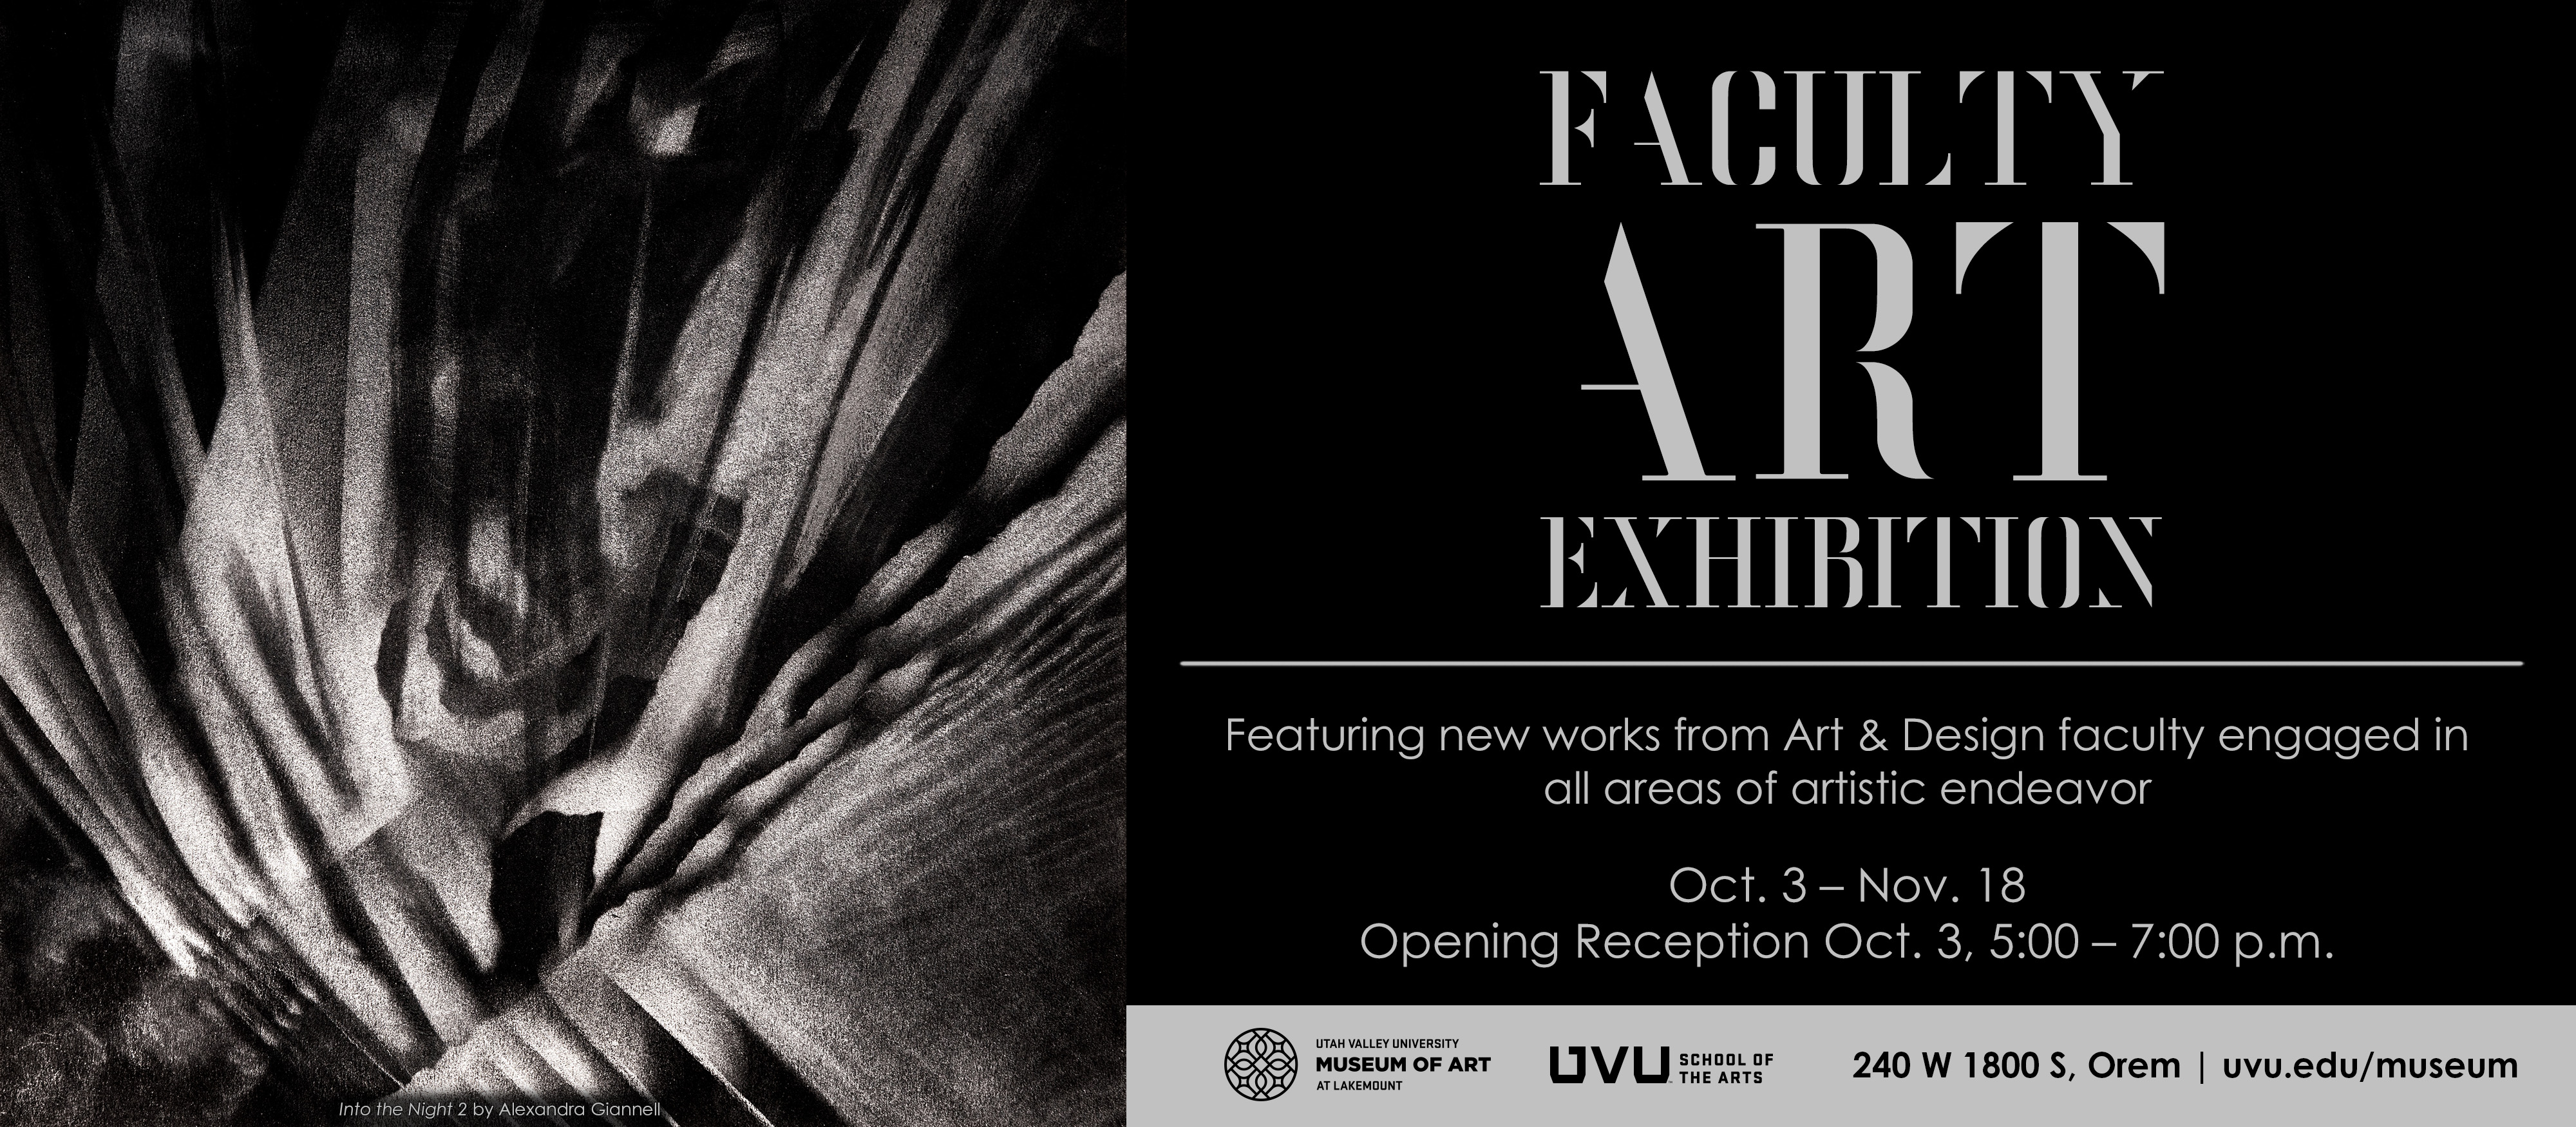 Faculty Art Exhibition - Oct. 3 - Nov. 18